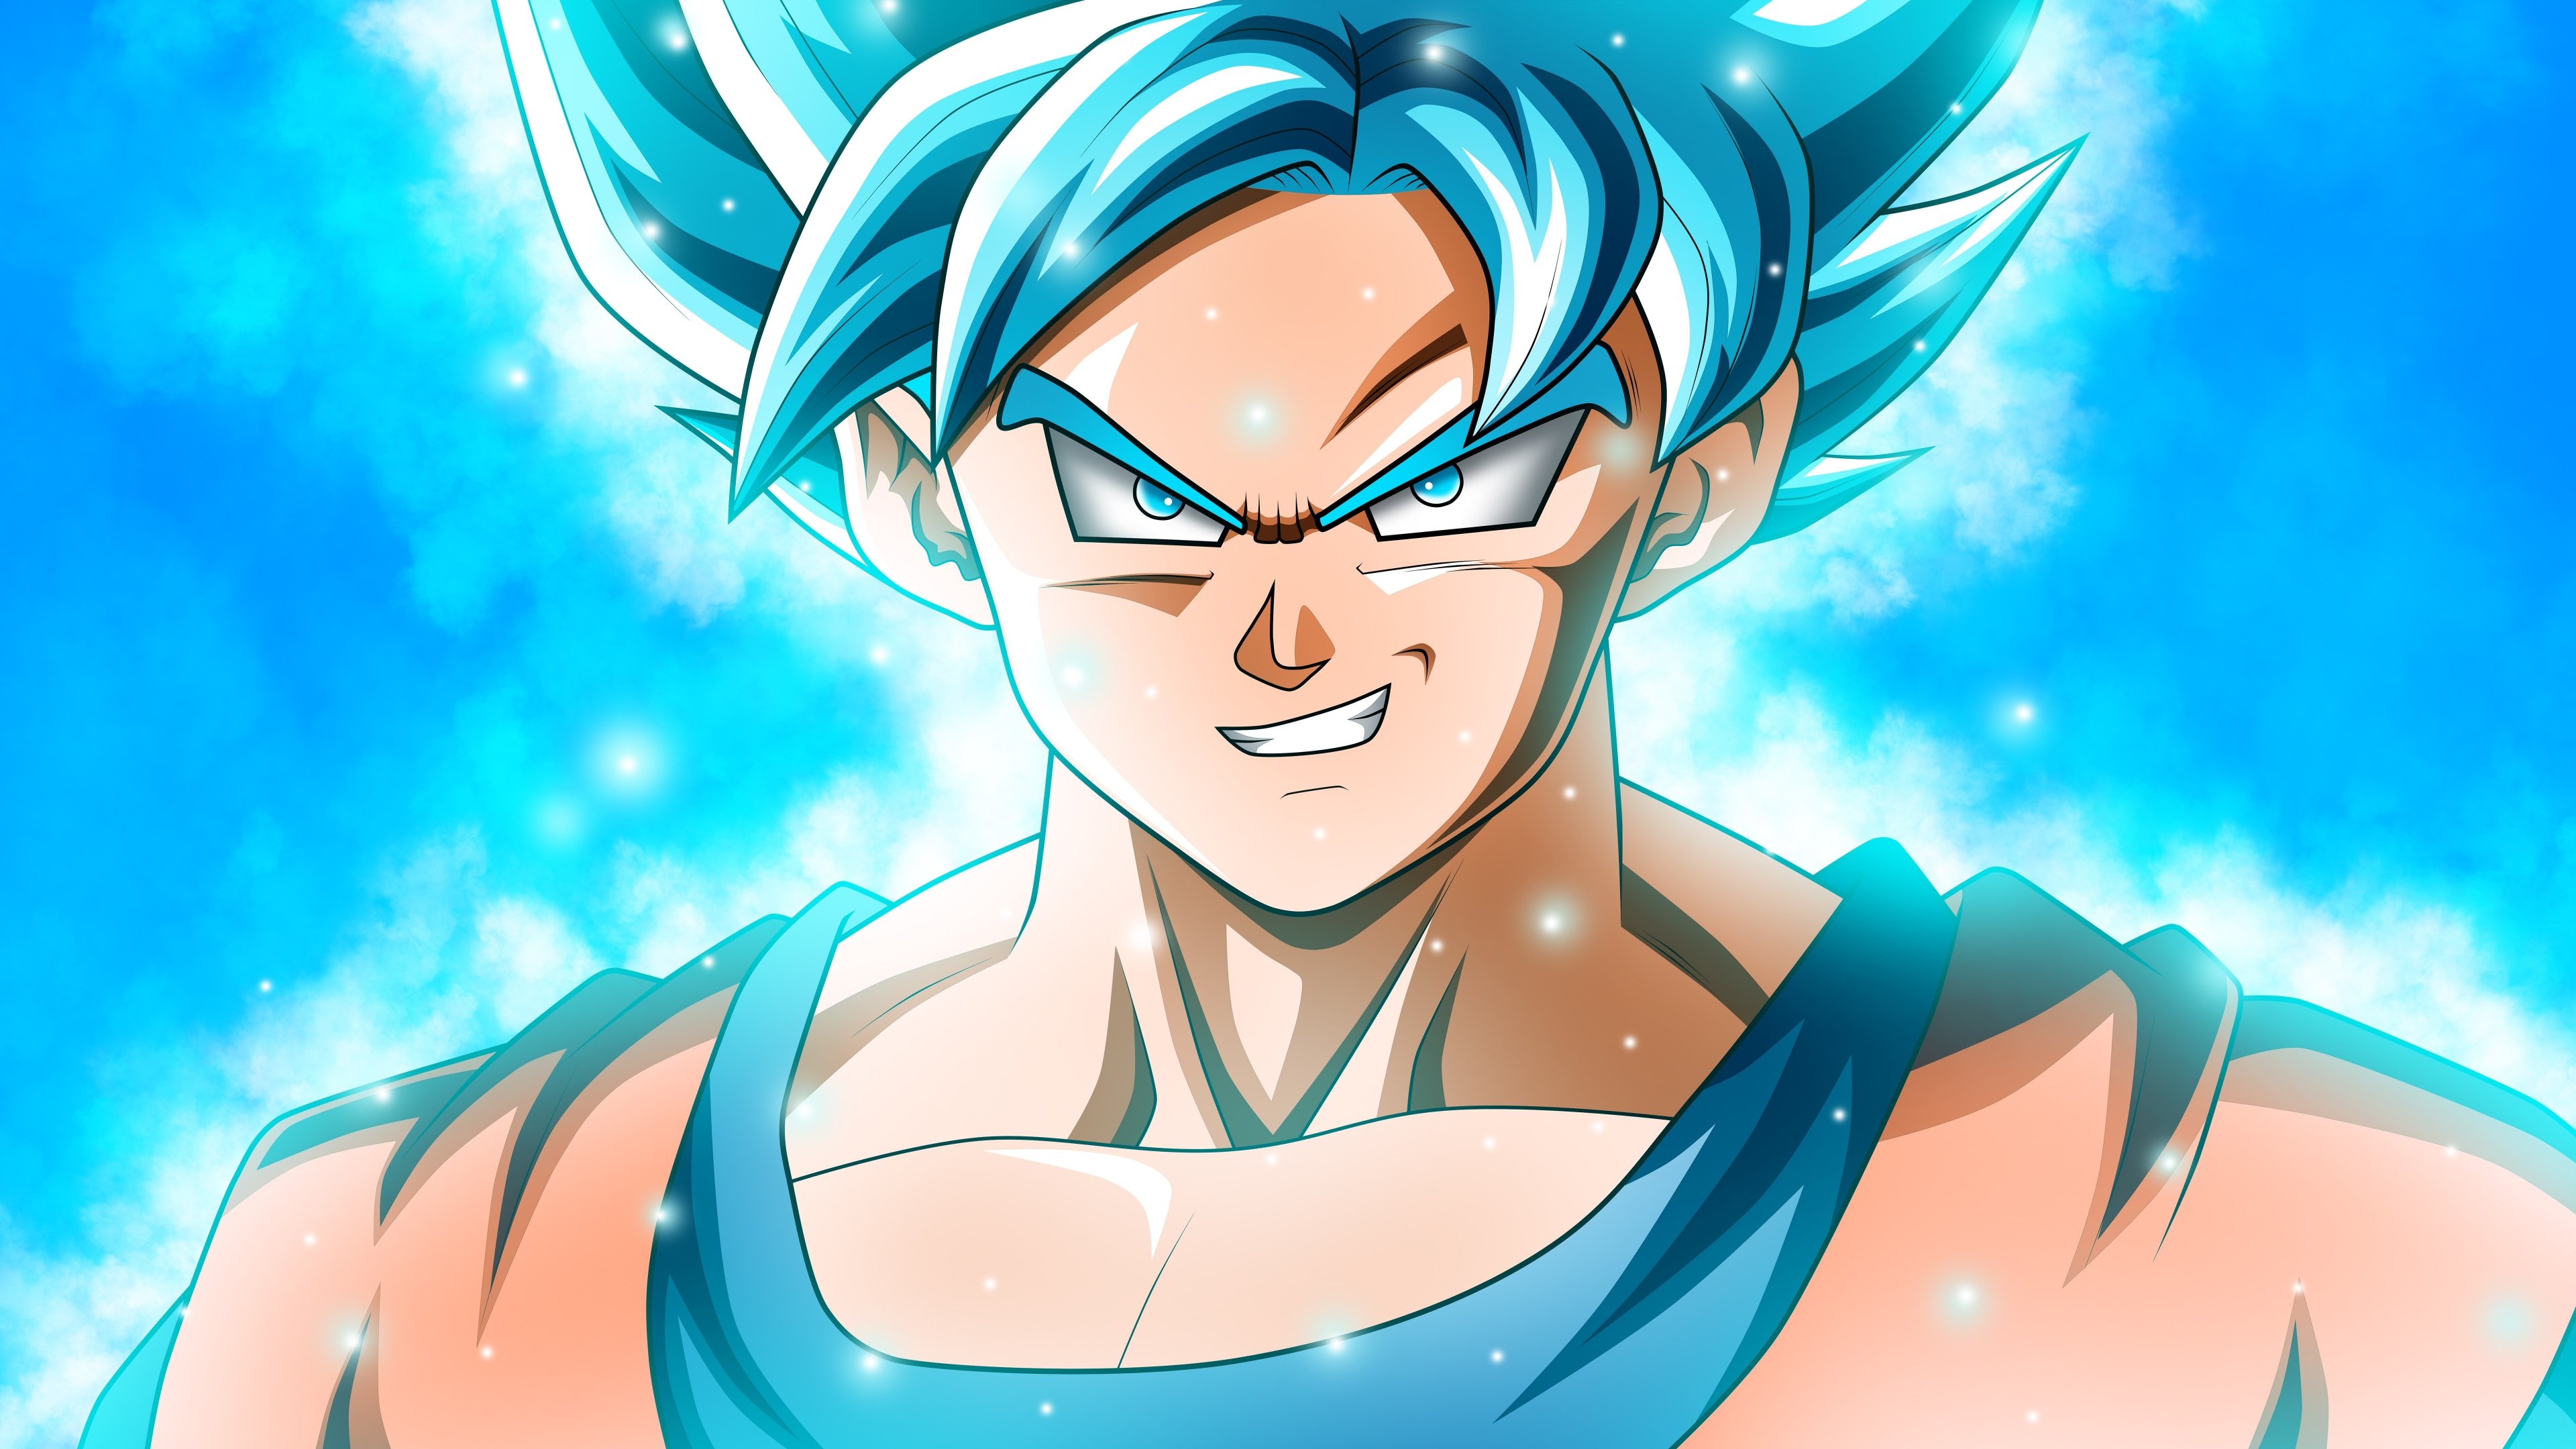 Goku Super Saiyan Blue from Dragon Ball Super Anime Wallpaper 8k Ultra HD